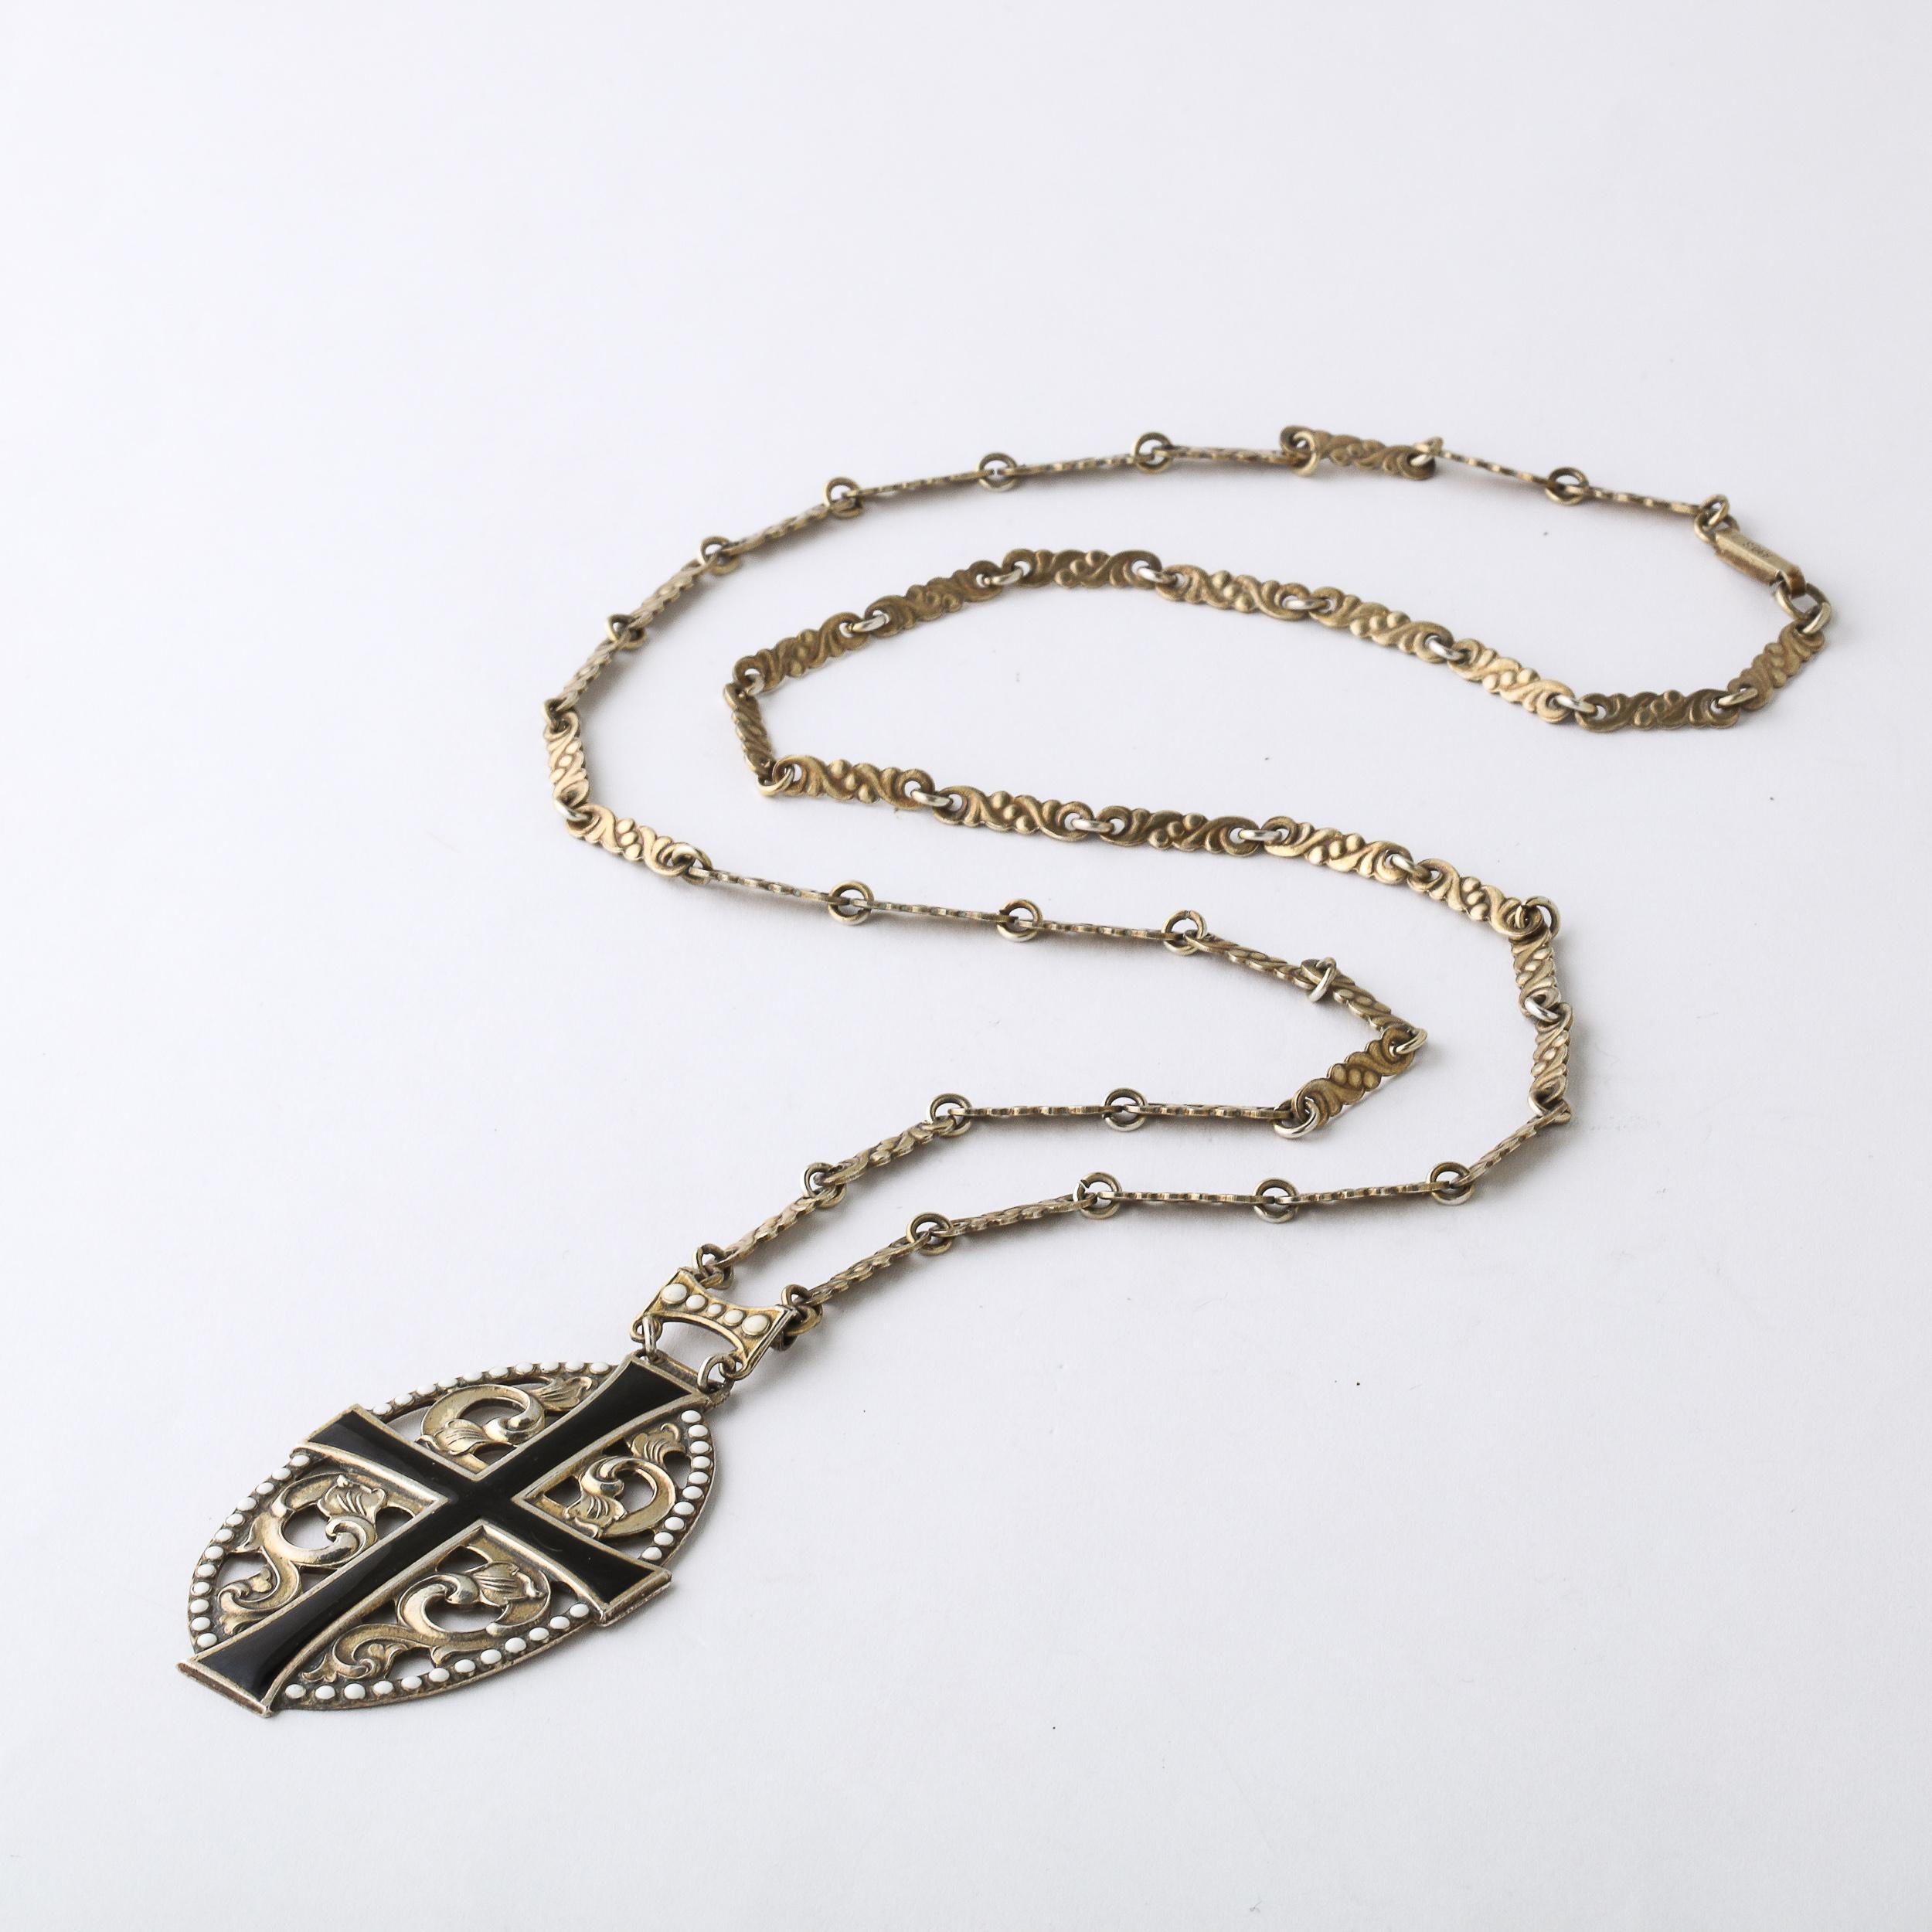 Antique Gilt Silver & Enamel Decorated Openwork Cross Pendant Necklace For Sale 4